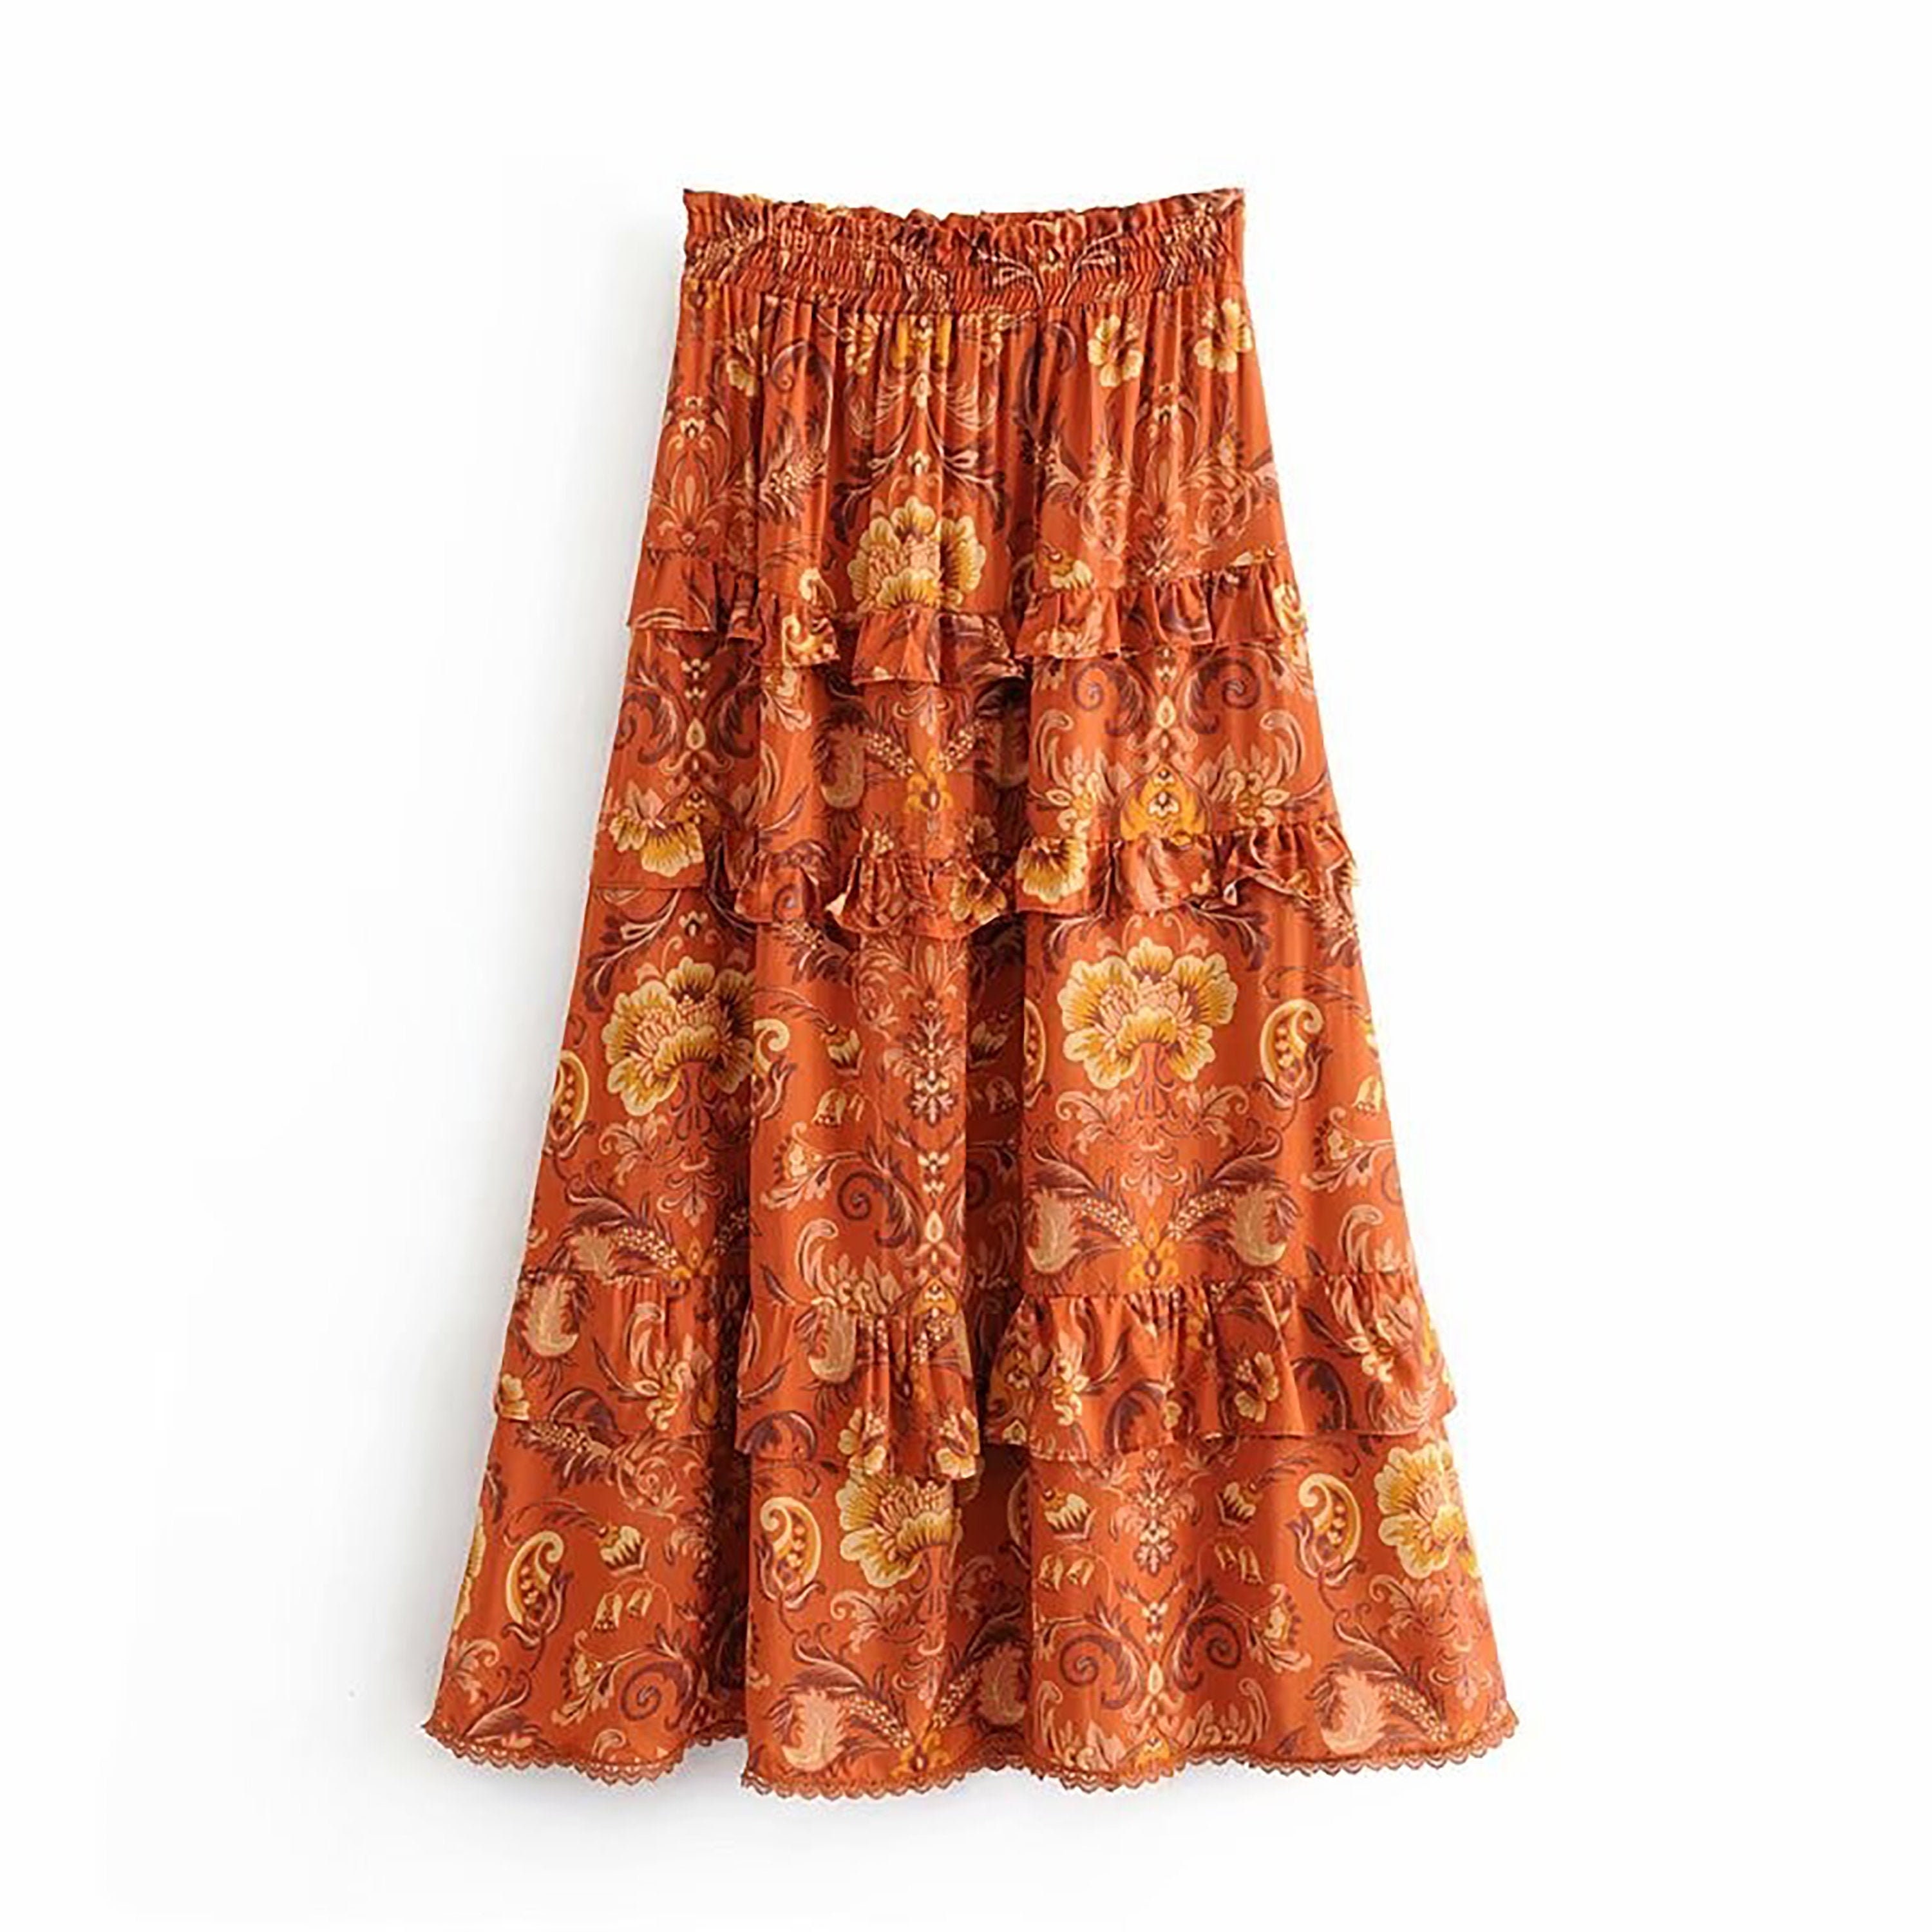 Unique Elegant Boho Skirt Floral Printed with unique design | Etsy